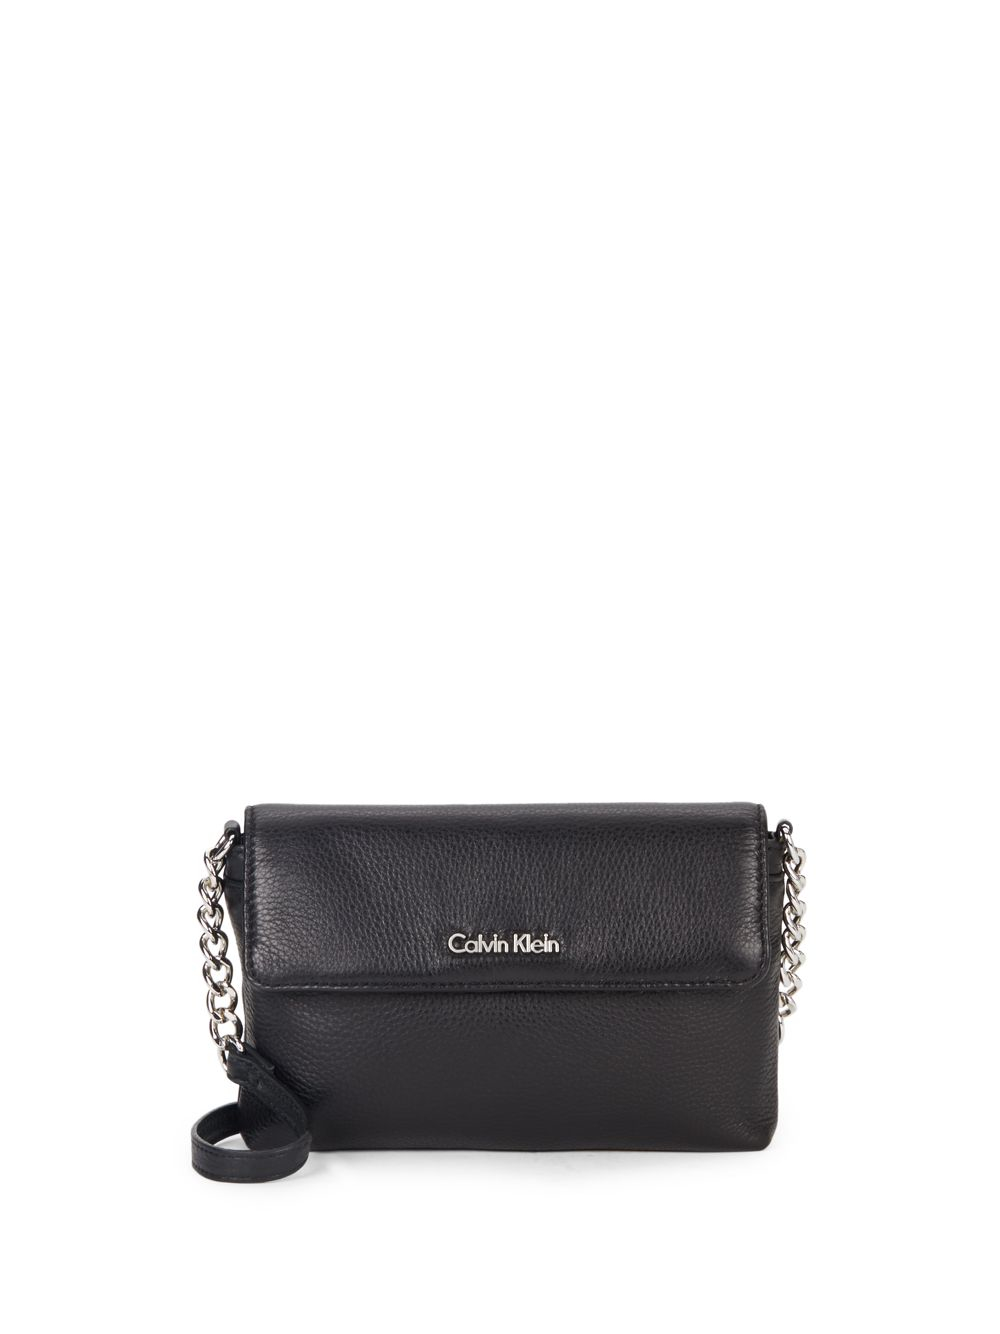 Calvin Klein Chain & Leather Crossbody Bag in Black - Lyst